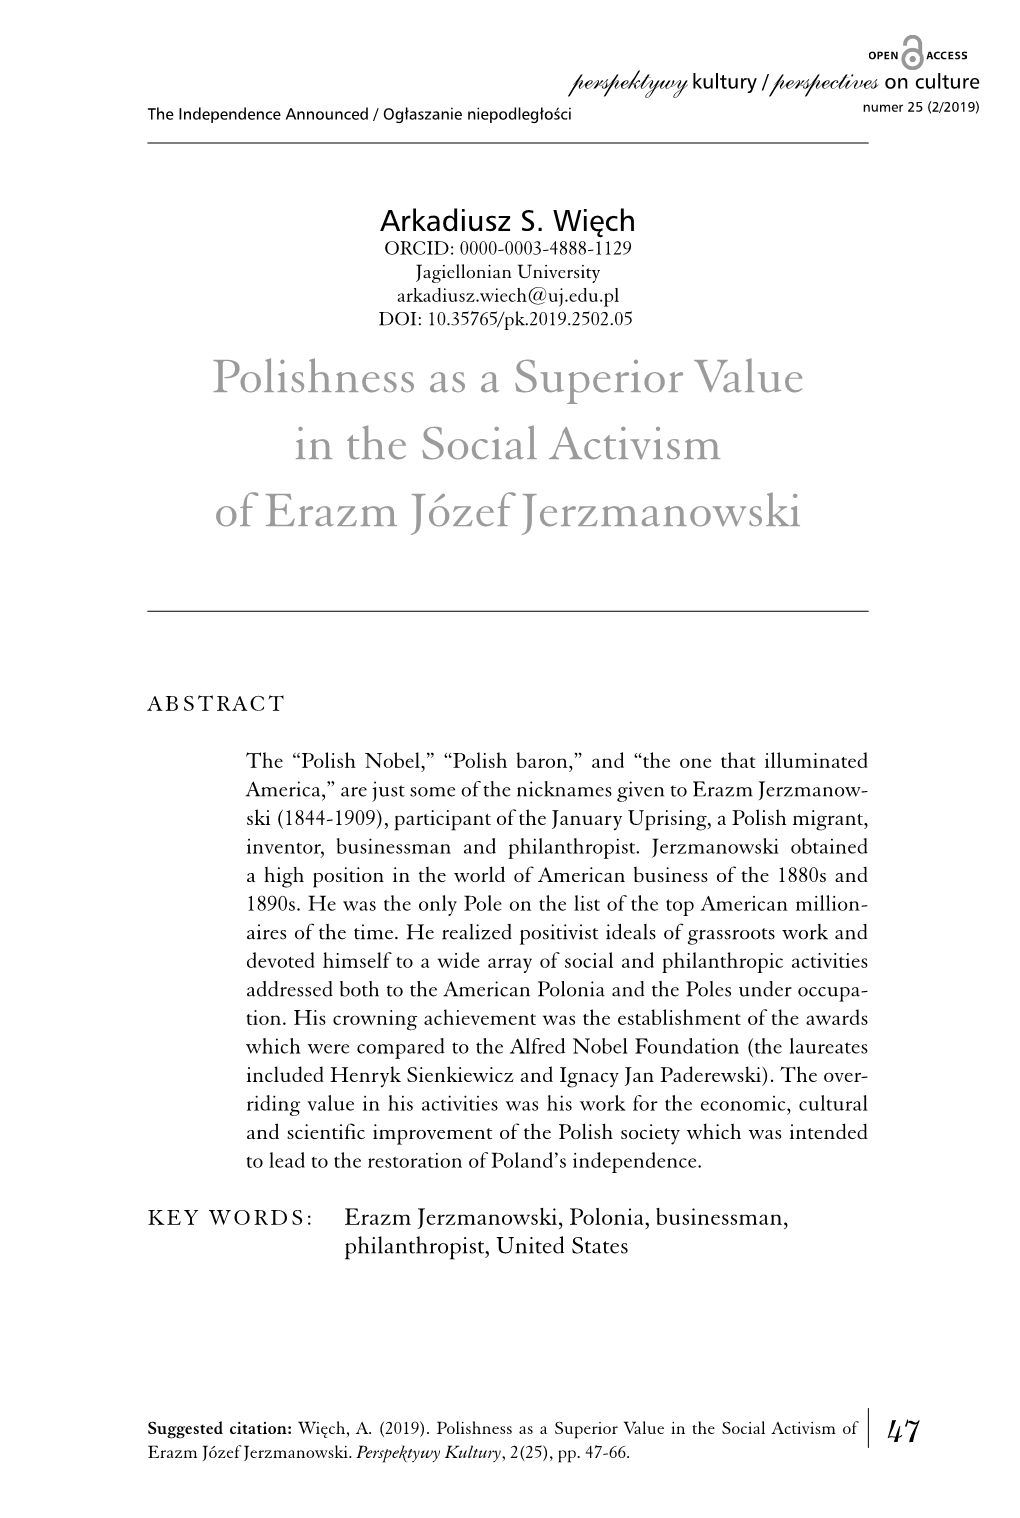 Polishness As a Superior Value in the Social Activism of Erazm Józef Jerzmanowski